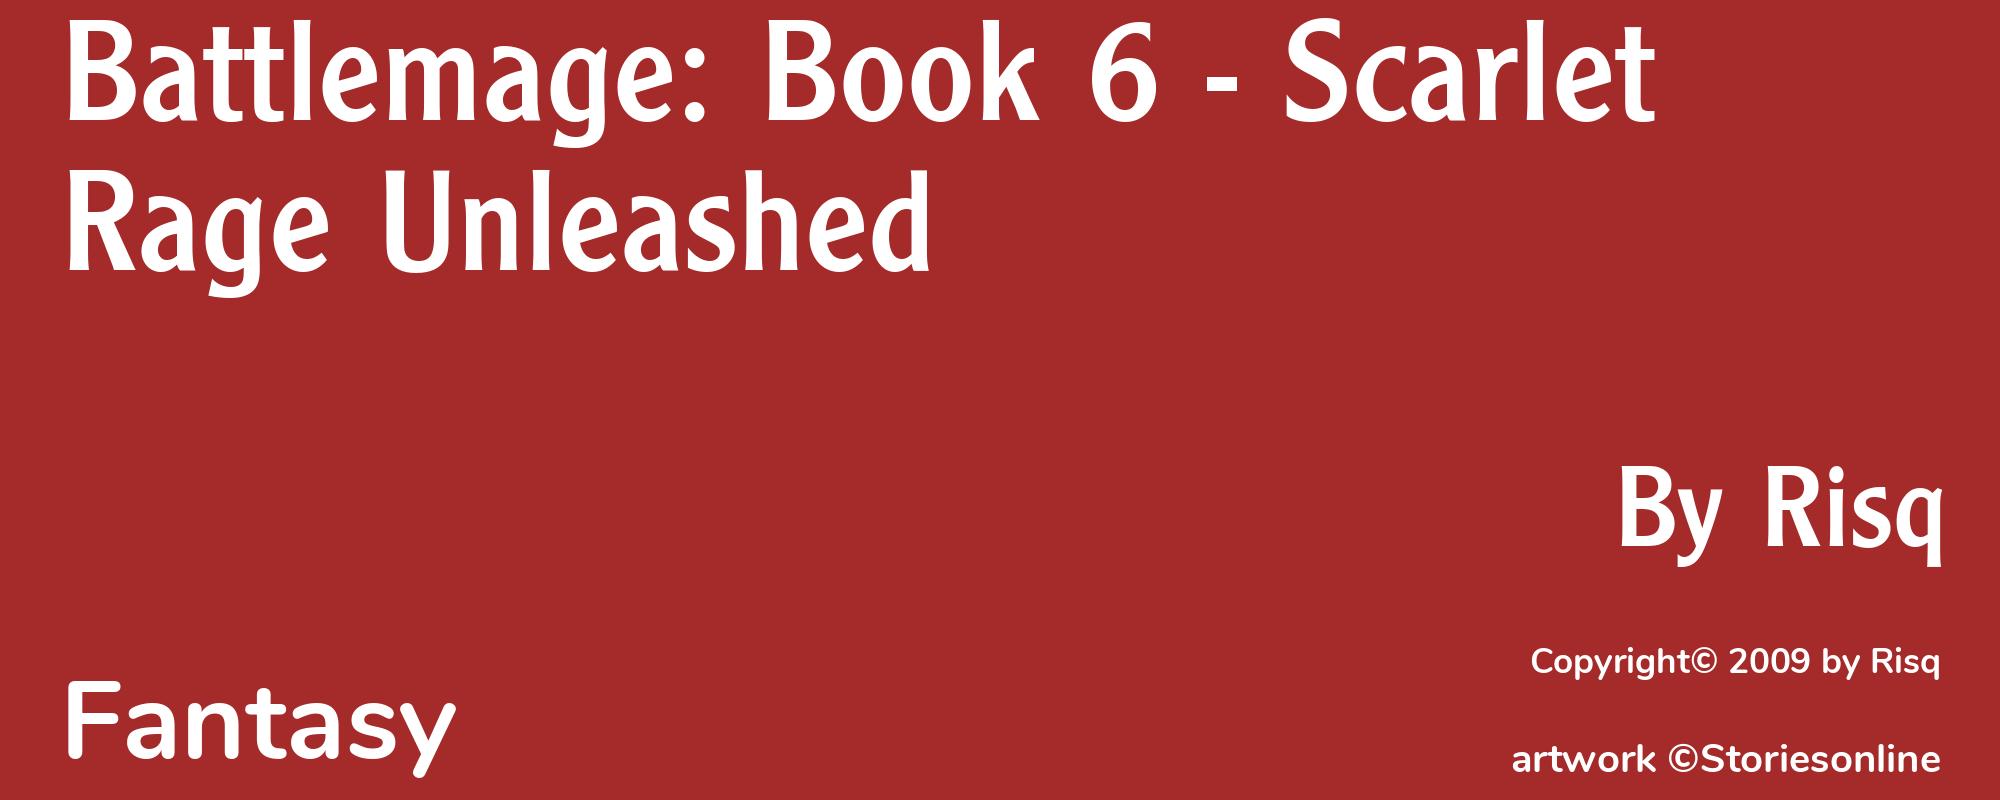 Battlemage: Book 6 - Scarlet Rage Unleashed - Cover